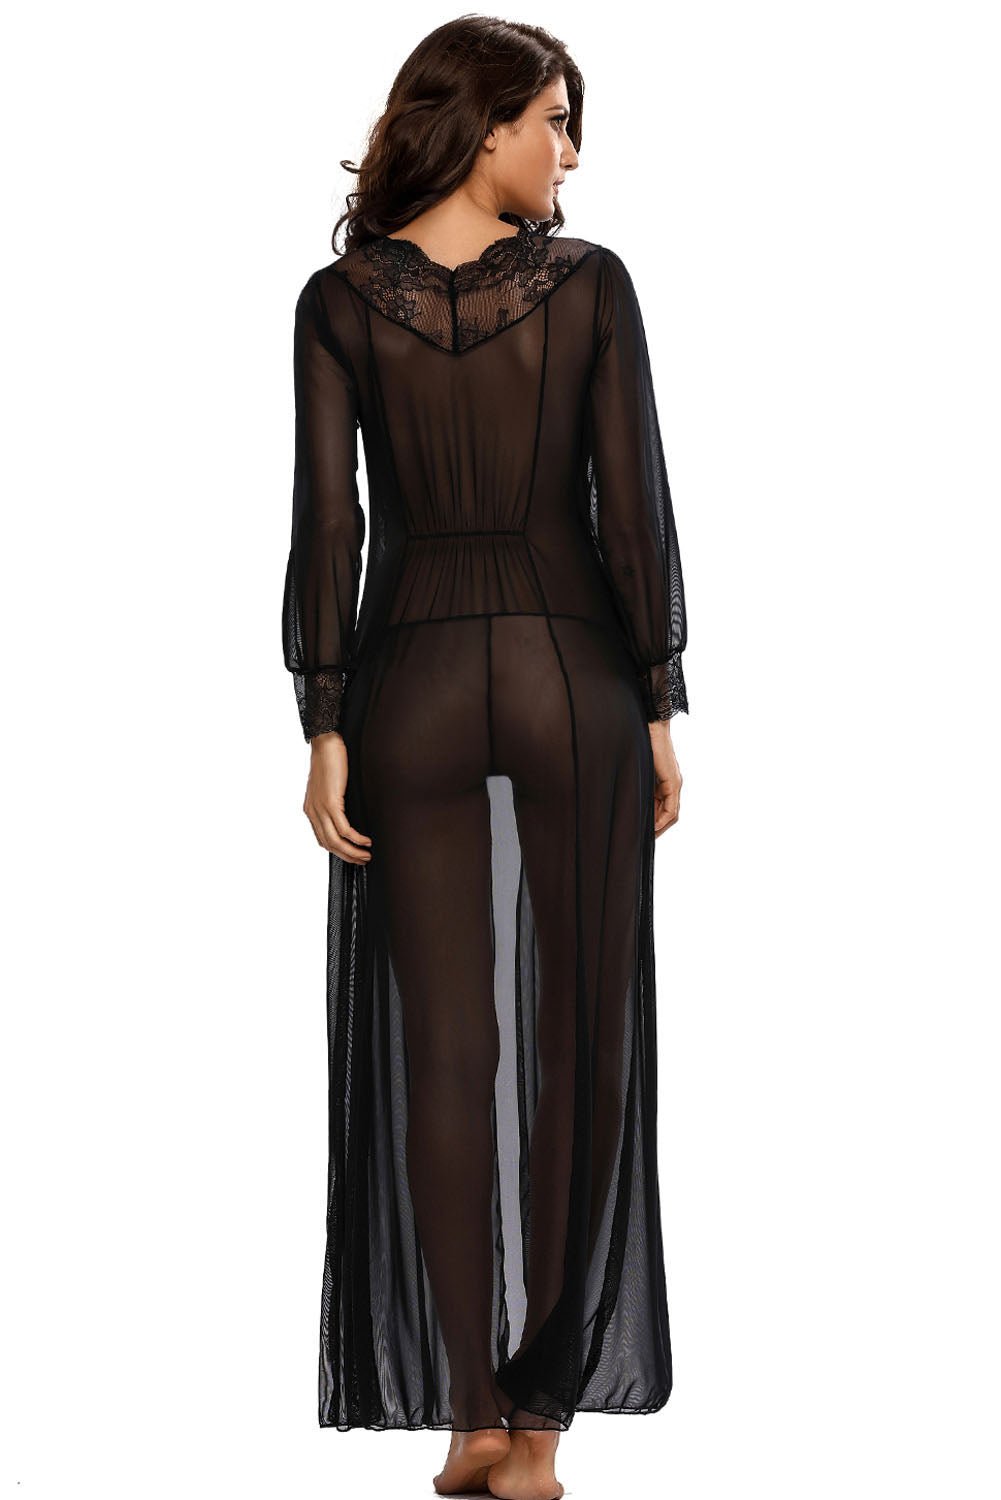 Juniper Premium Nigthwear/ Robe - Plus Size (Black) - Lace Theories